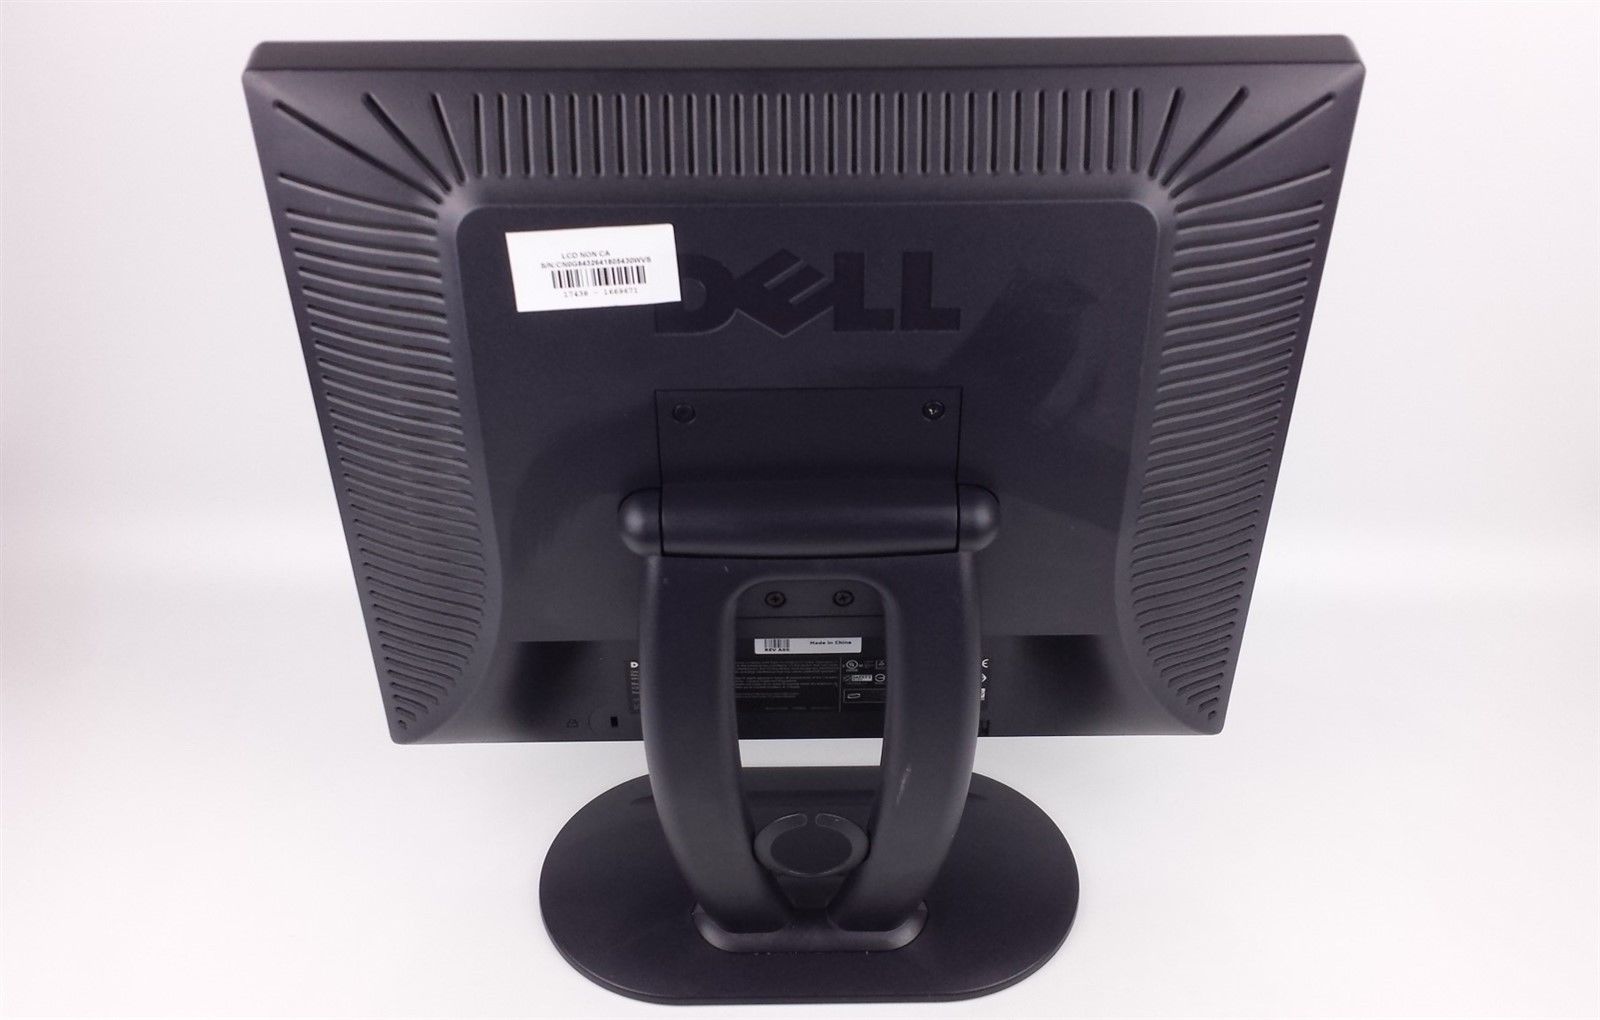 Dell E Series E193FPc LCD Flat Panel Display Monitor 19" G8432 w/ Power&VGA Cord